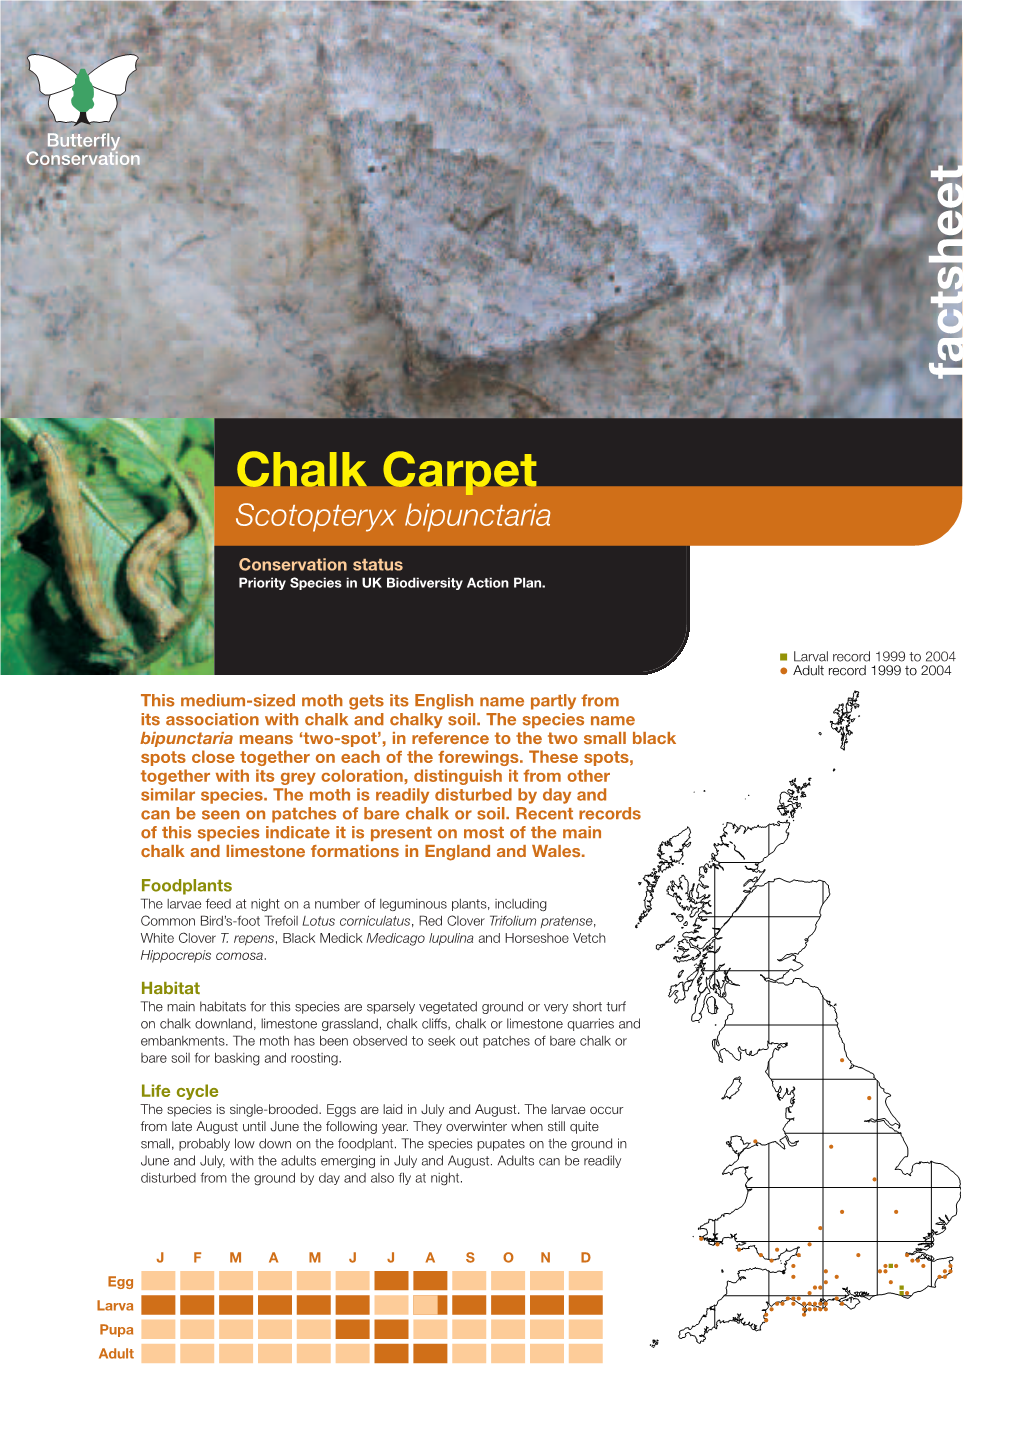 Chalk Carpet Priority Species Factsheet